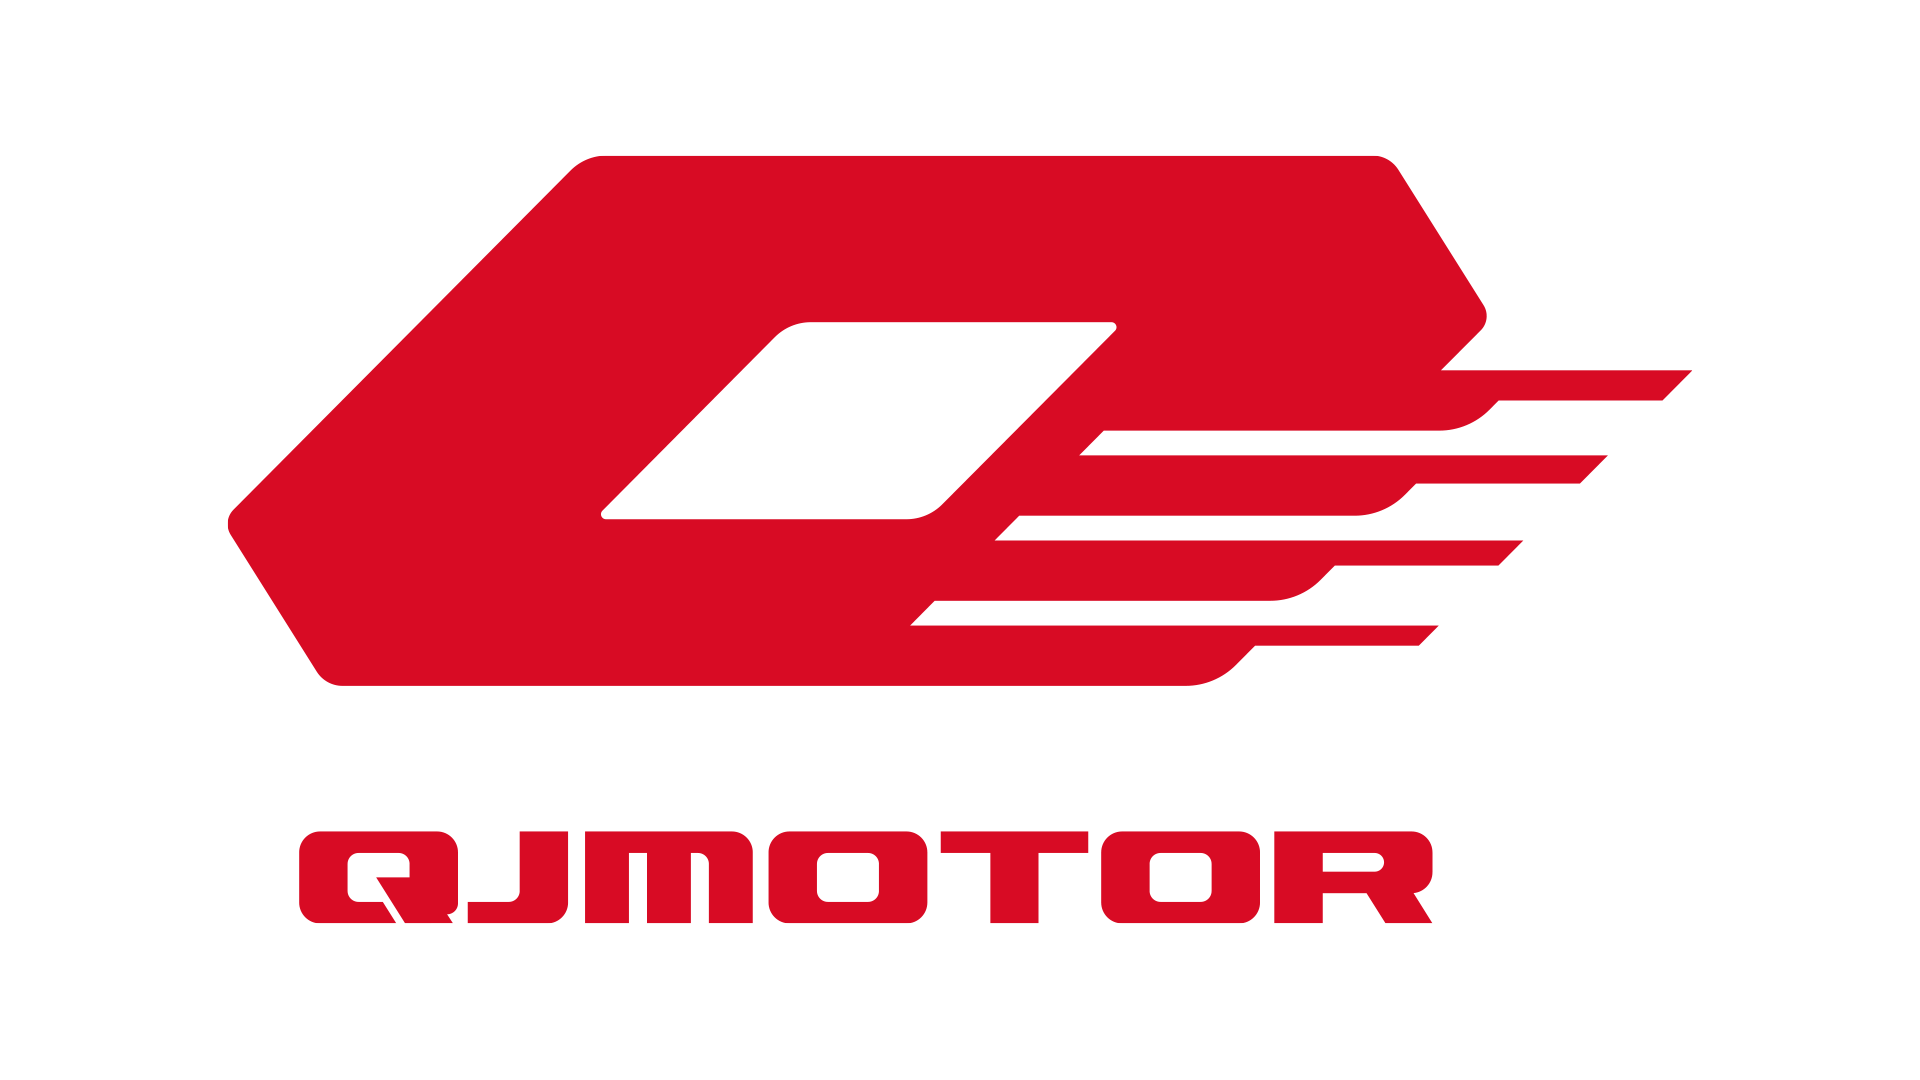 “qjmotor-logo"